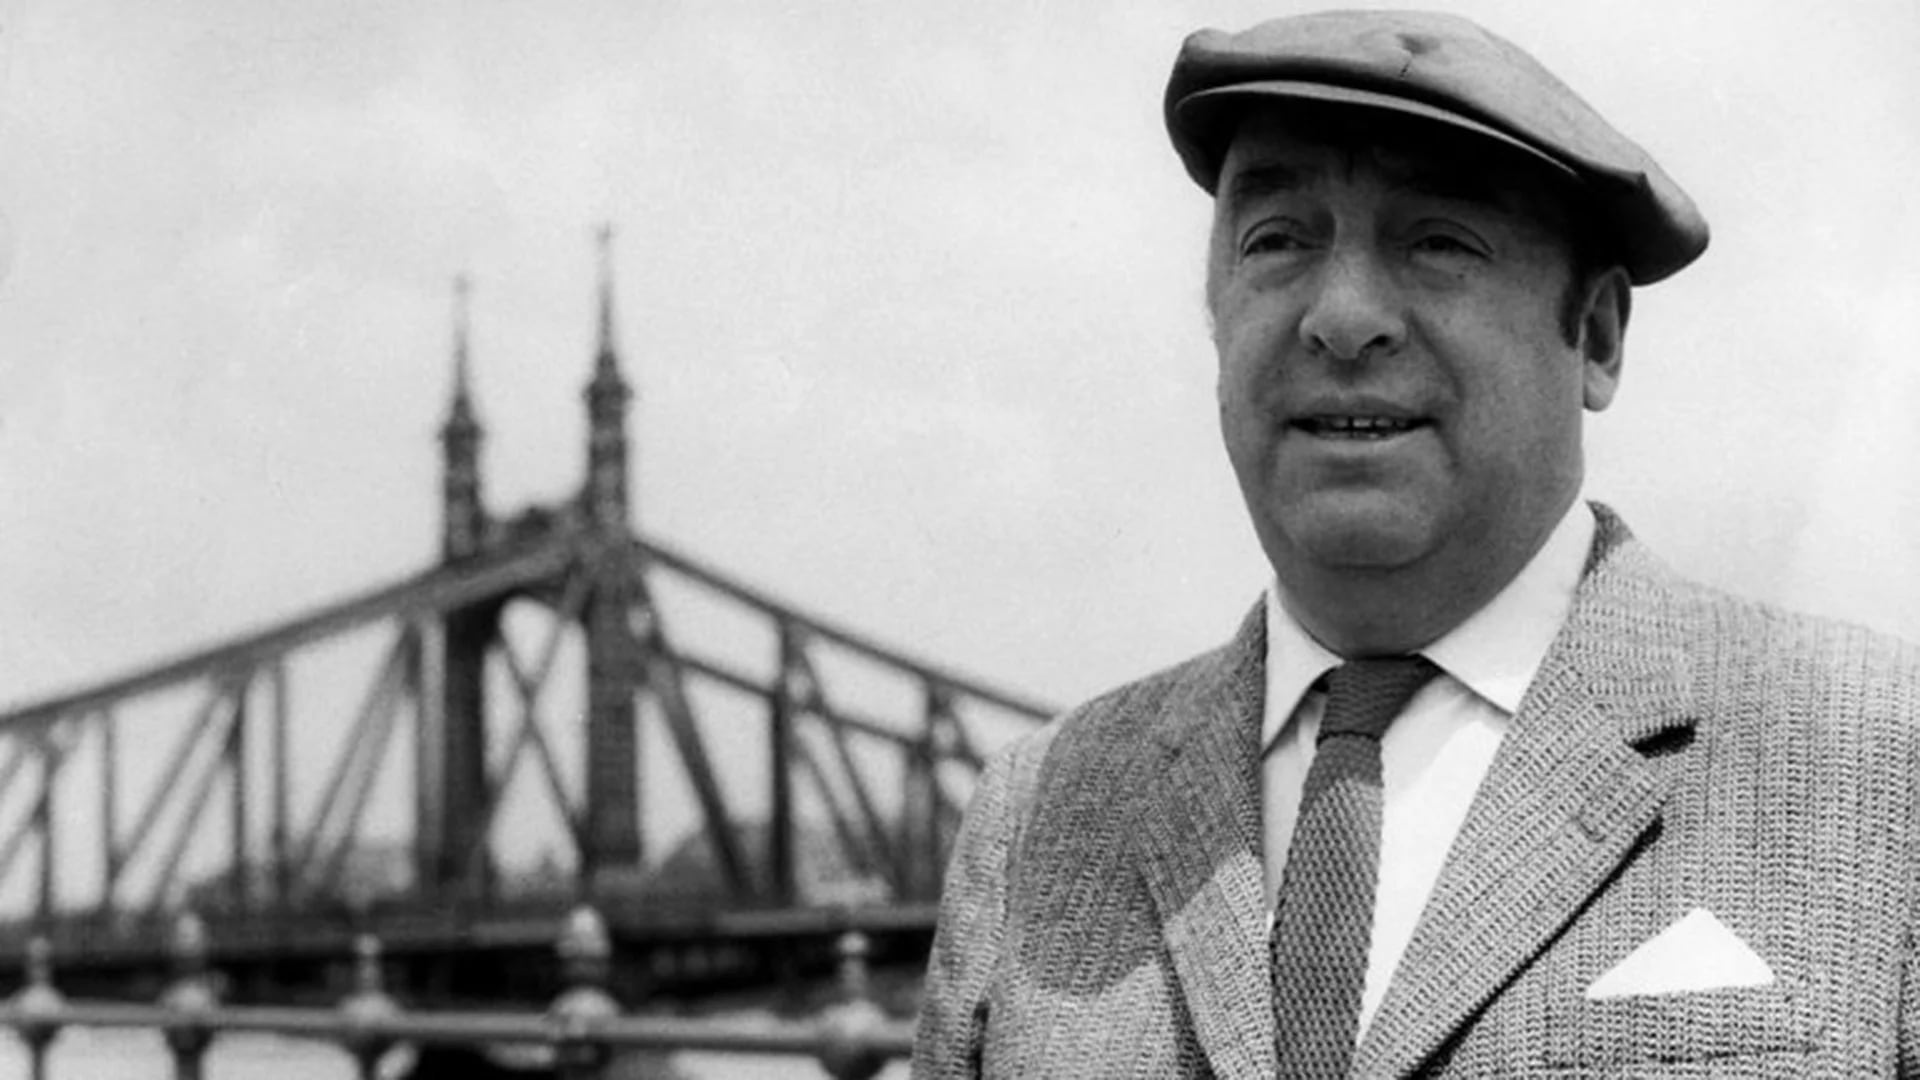 Pablo Neruda No Murió De Cáncer Asegura Equipo Internacional De Peritos Infobae 4549